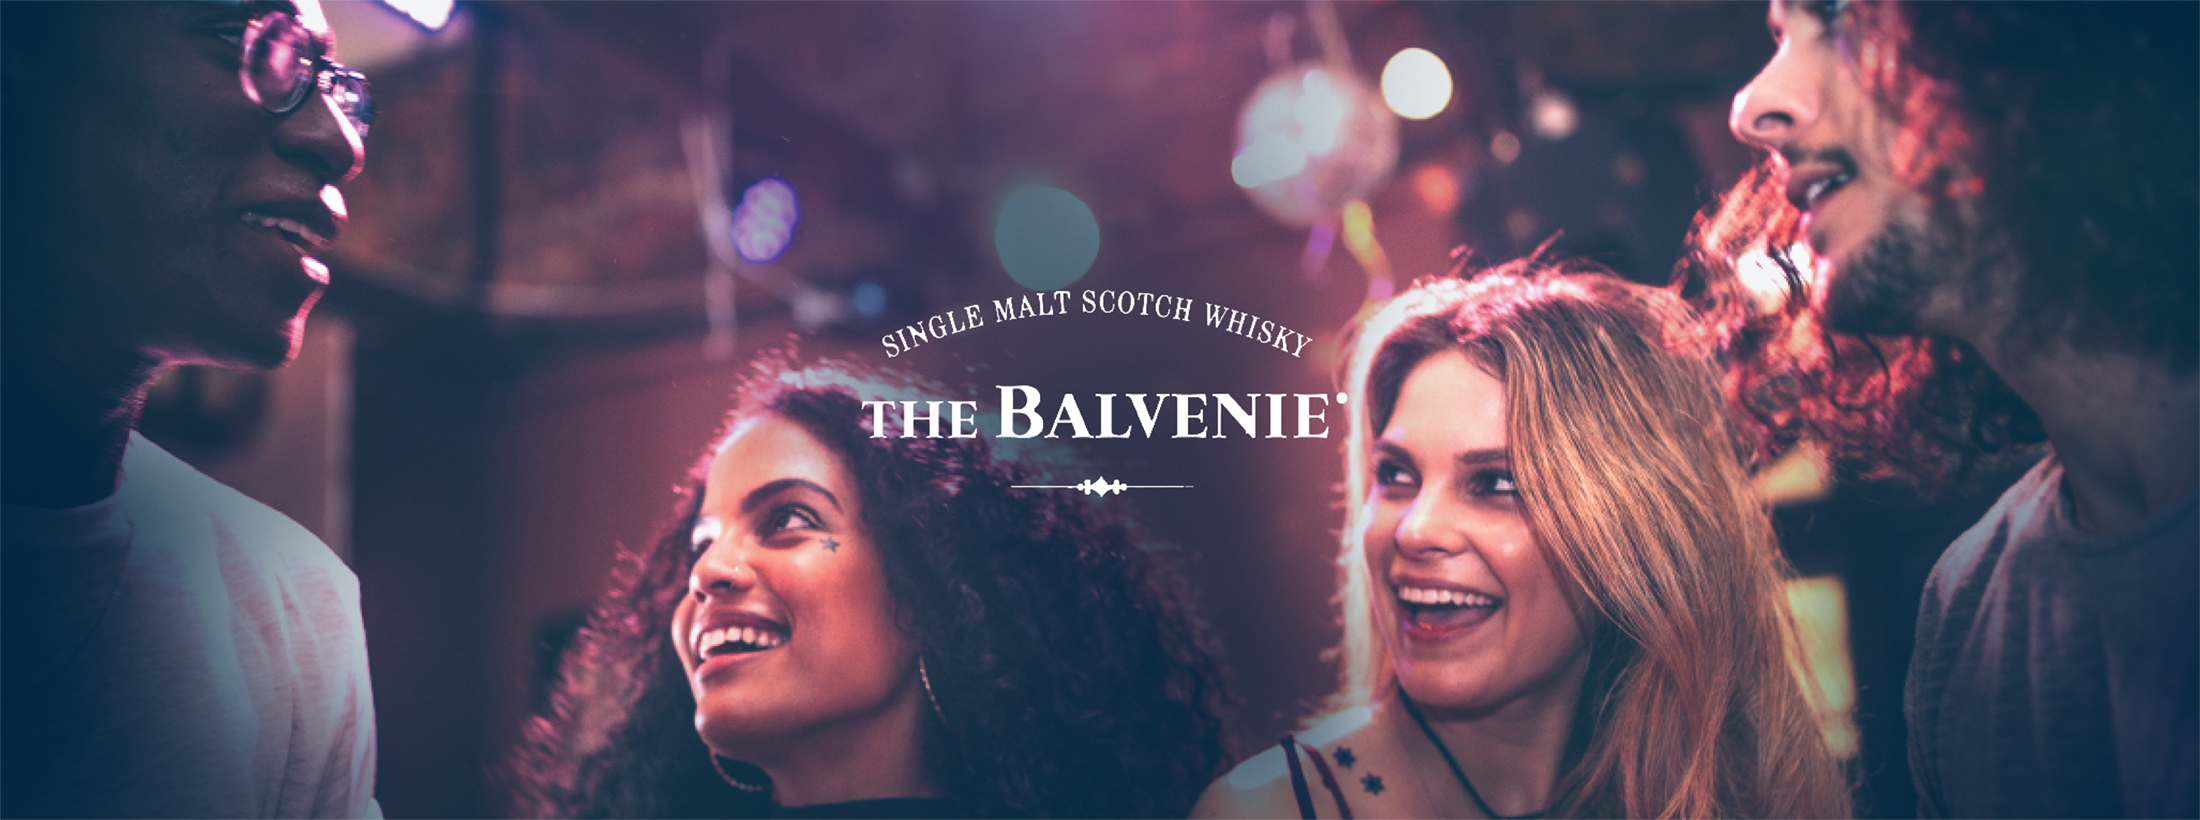 Edward Snell & Co. | Brands | The Balvenie